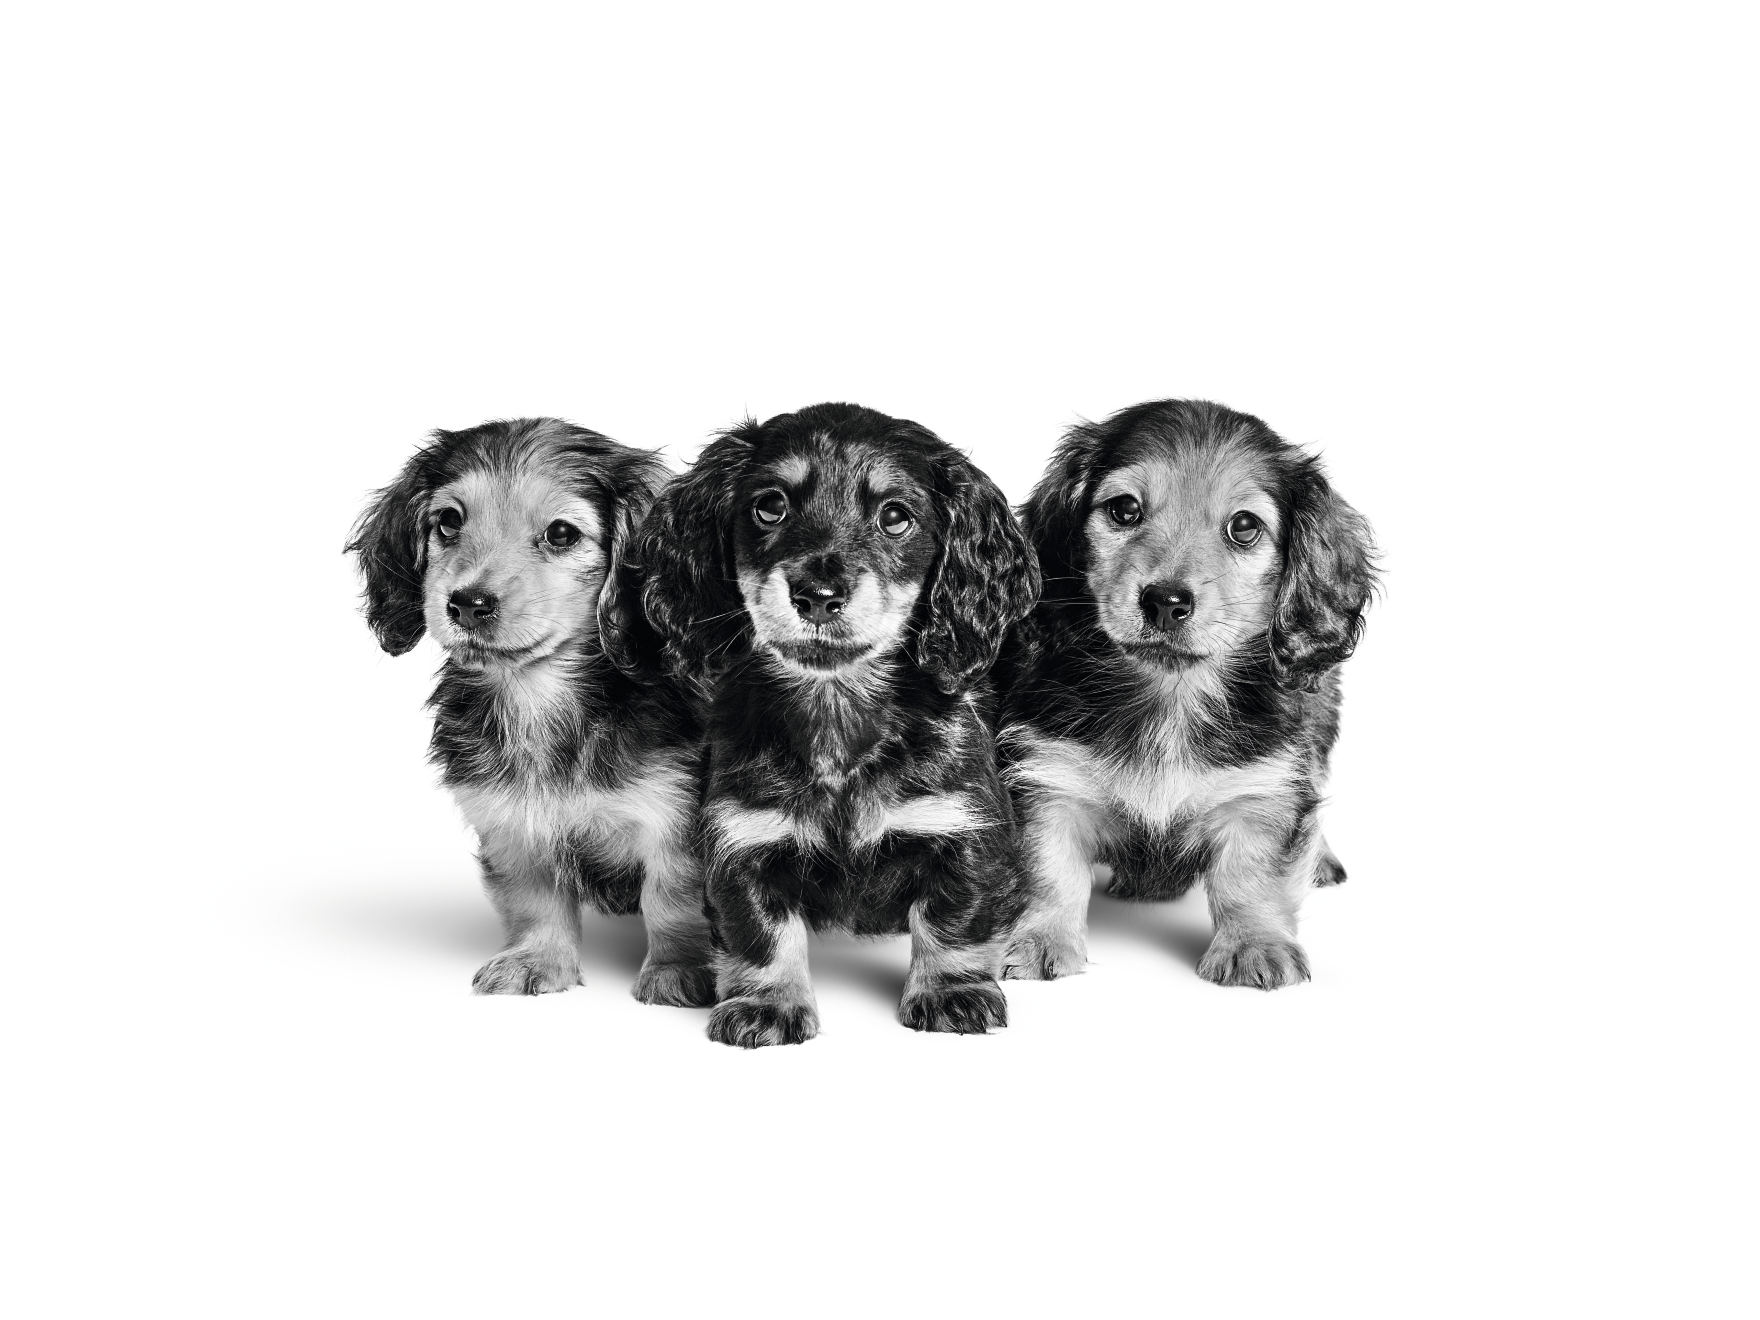 Three Dachshund puppies in black and white